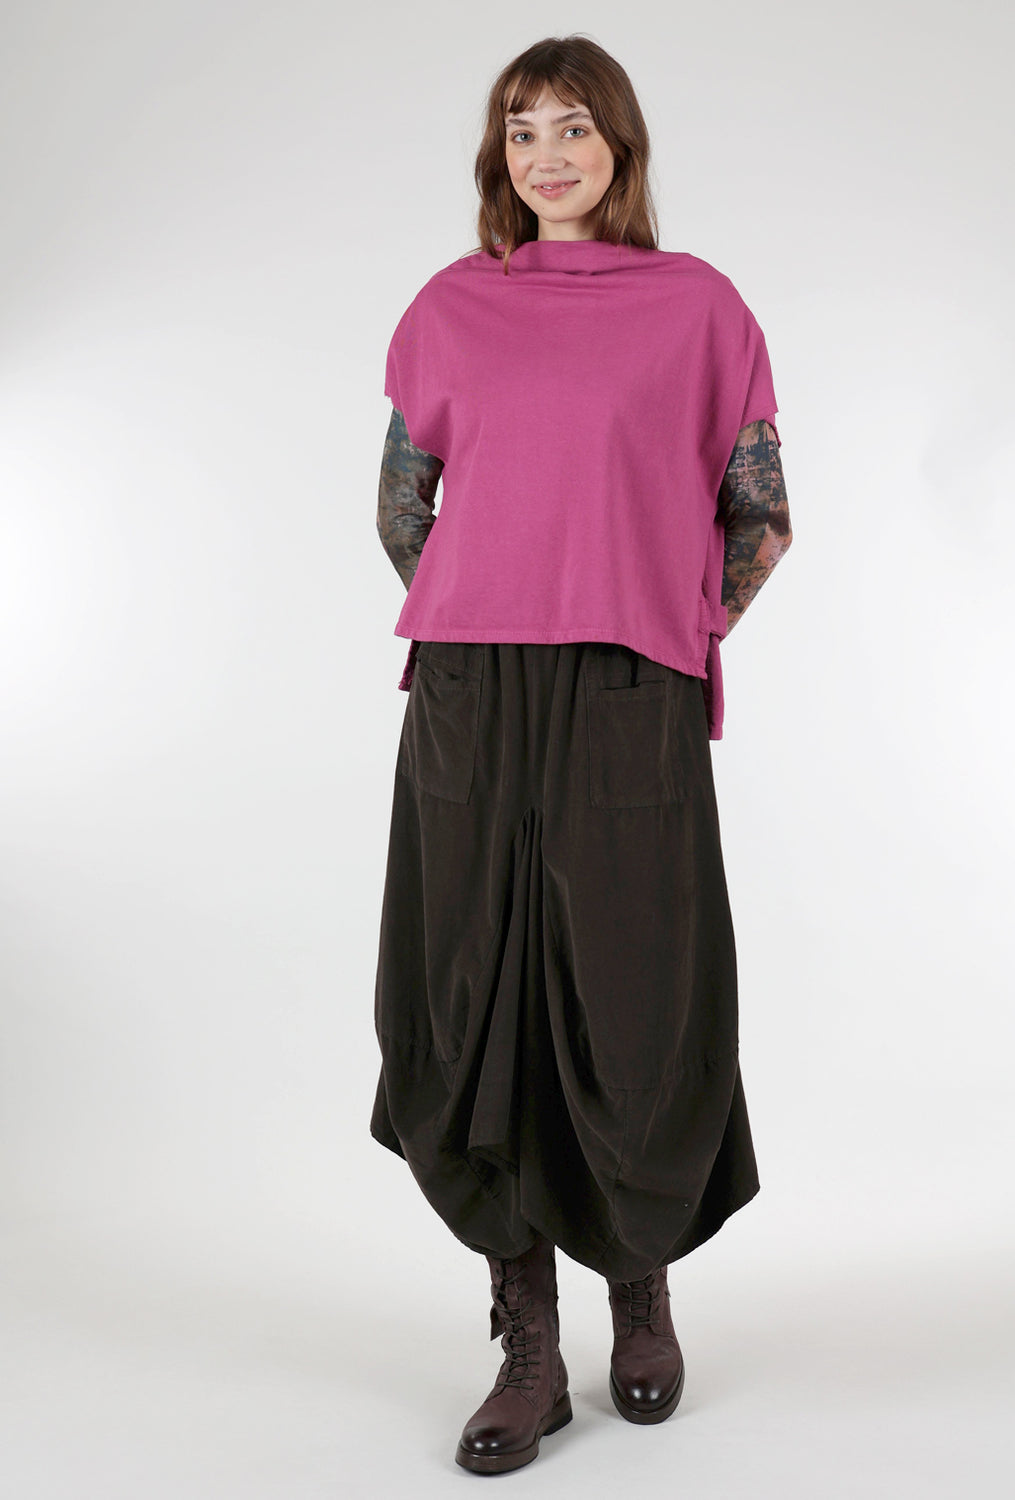 Two-Pocket Corduroy Skirt, Cocoa Brown